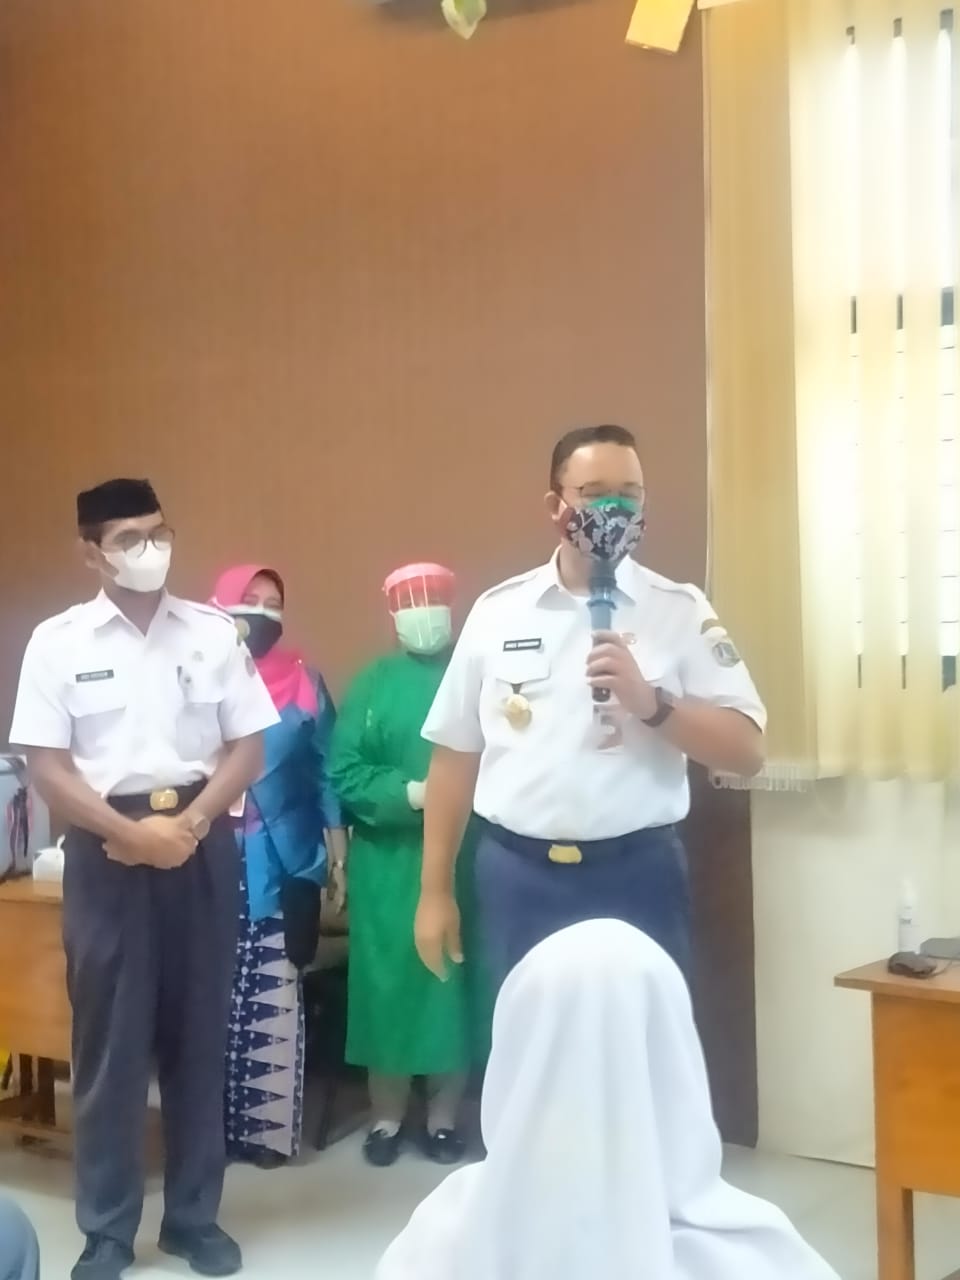 SMKN 15 Jakarta